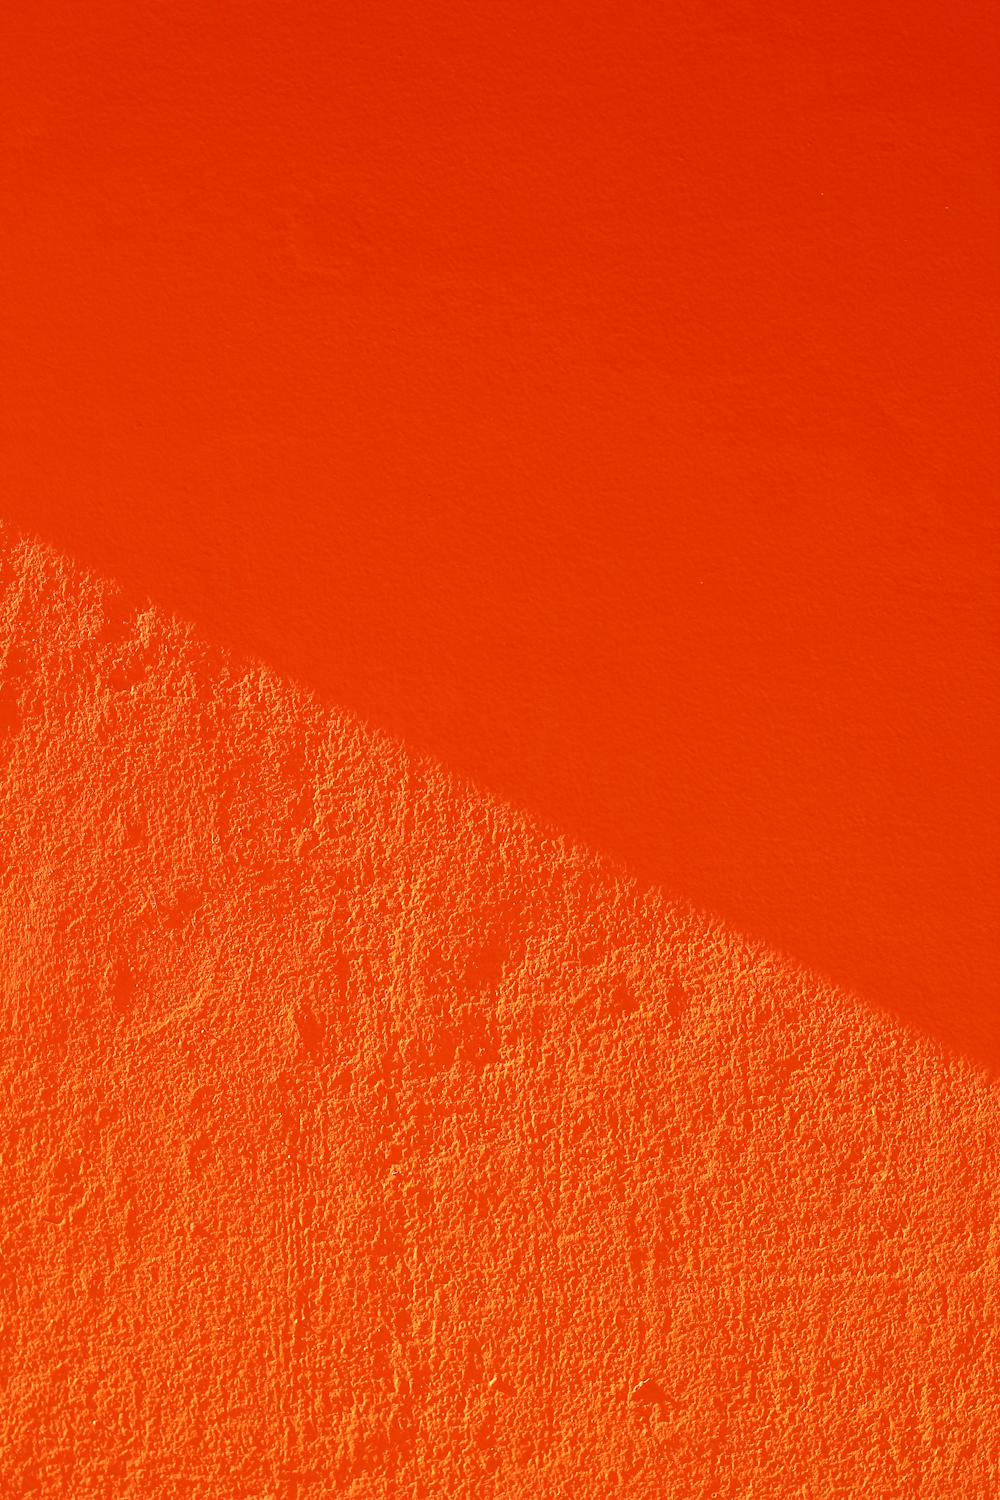 550+ Orange Background Pictures | Download Free Images on Unsplash